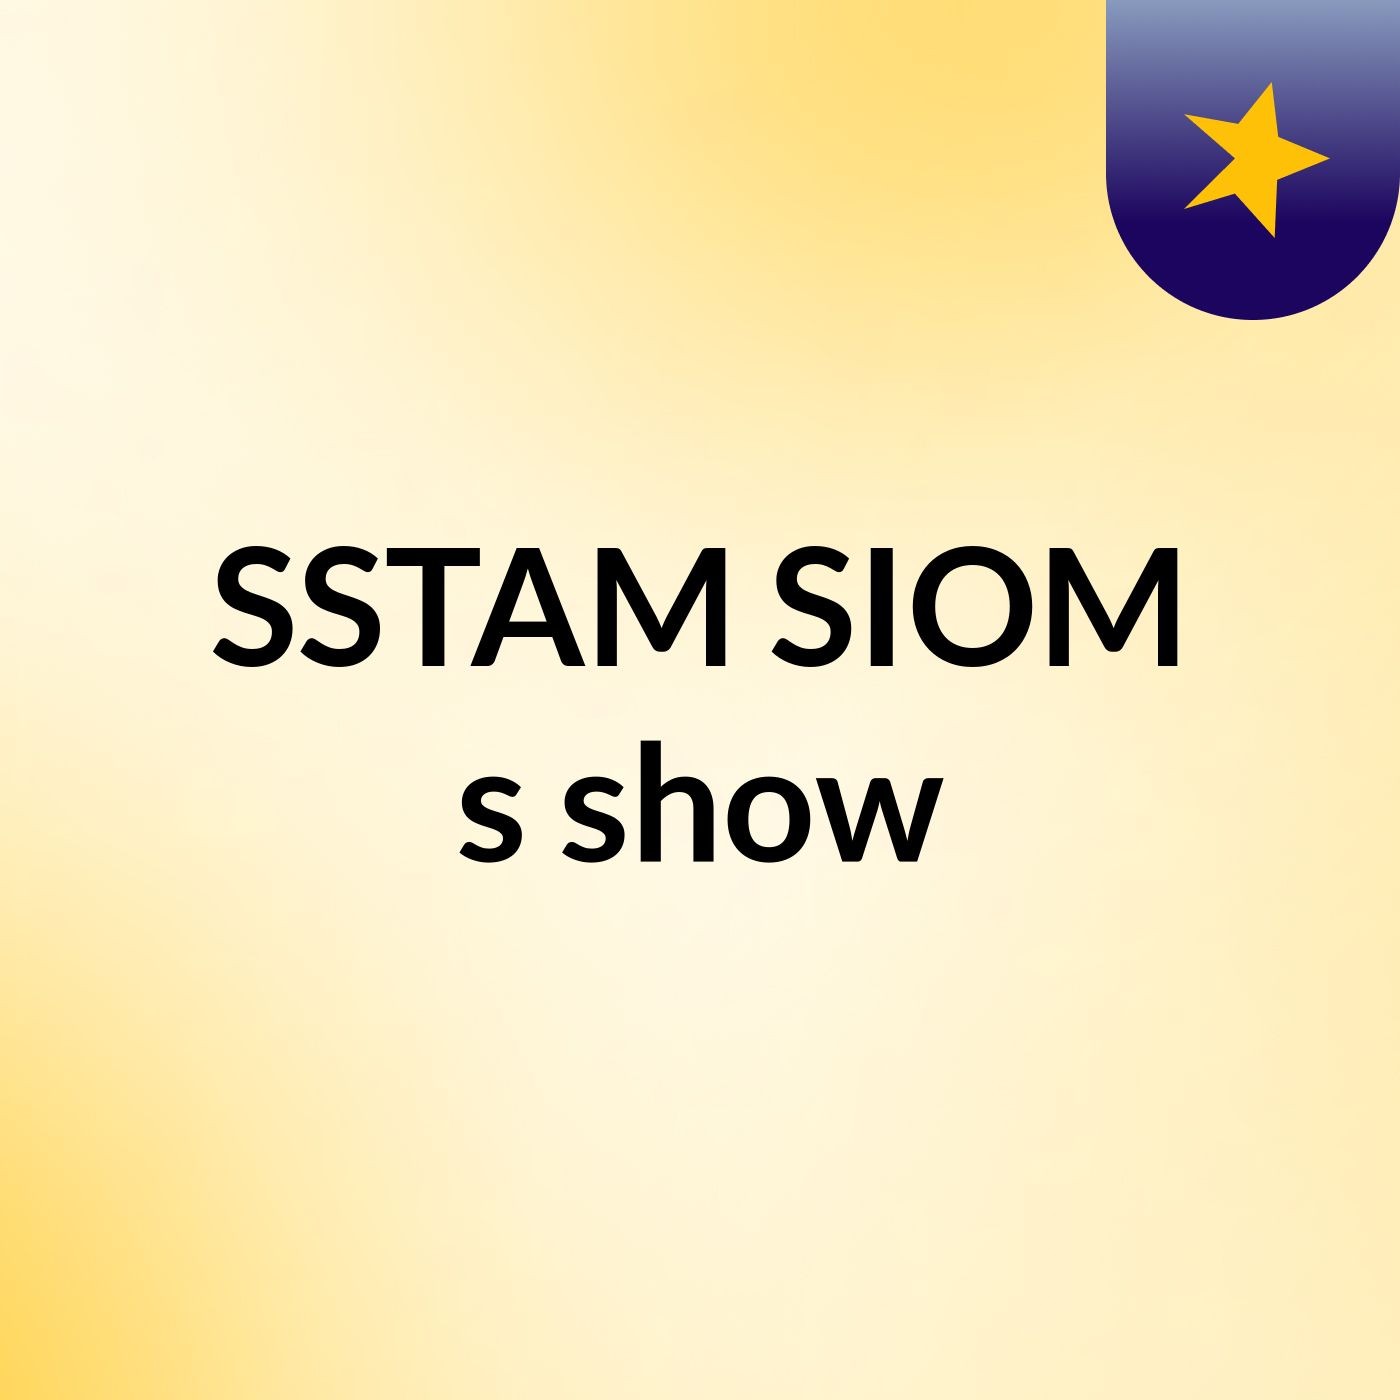 SSTAM SIOM's show